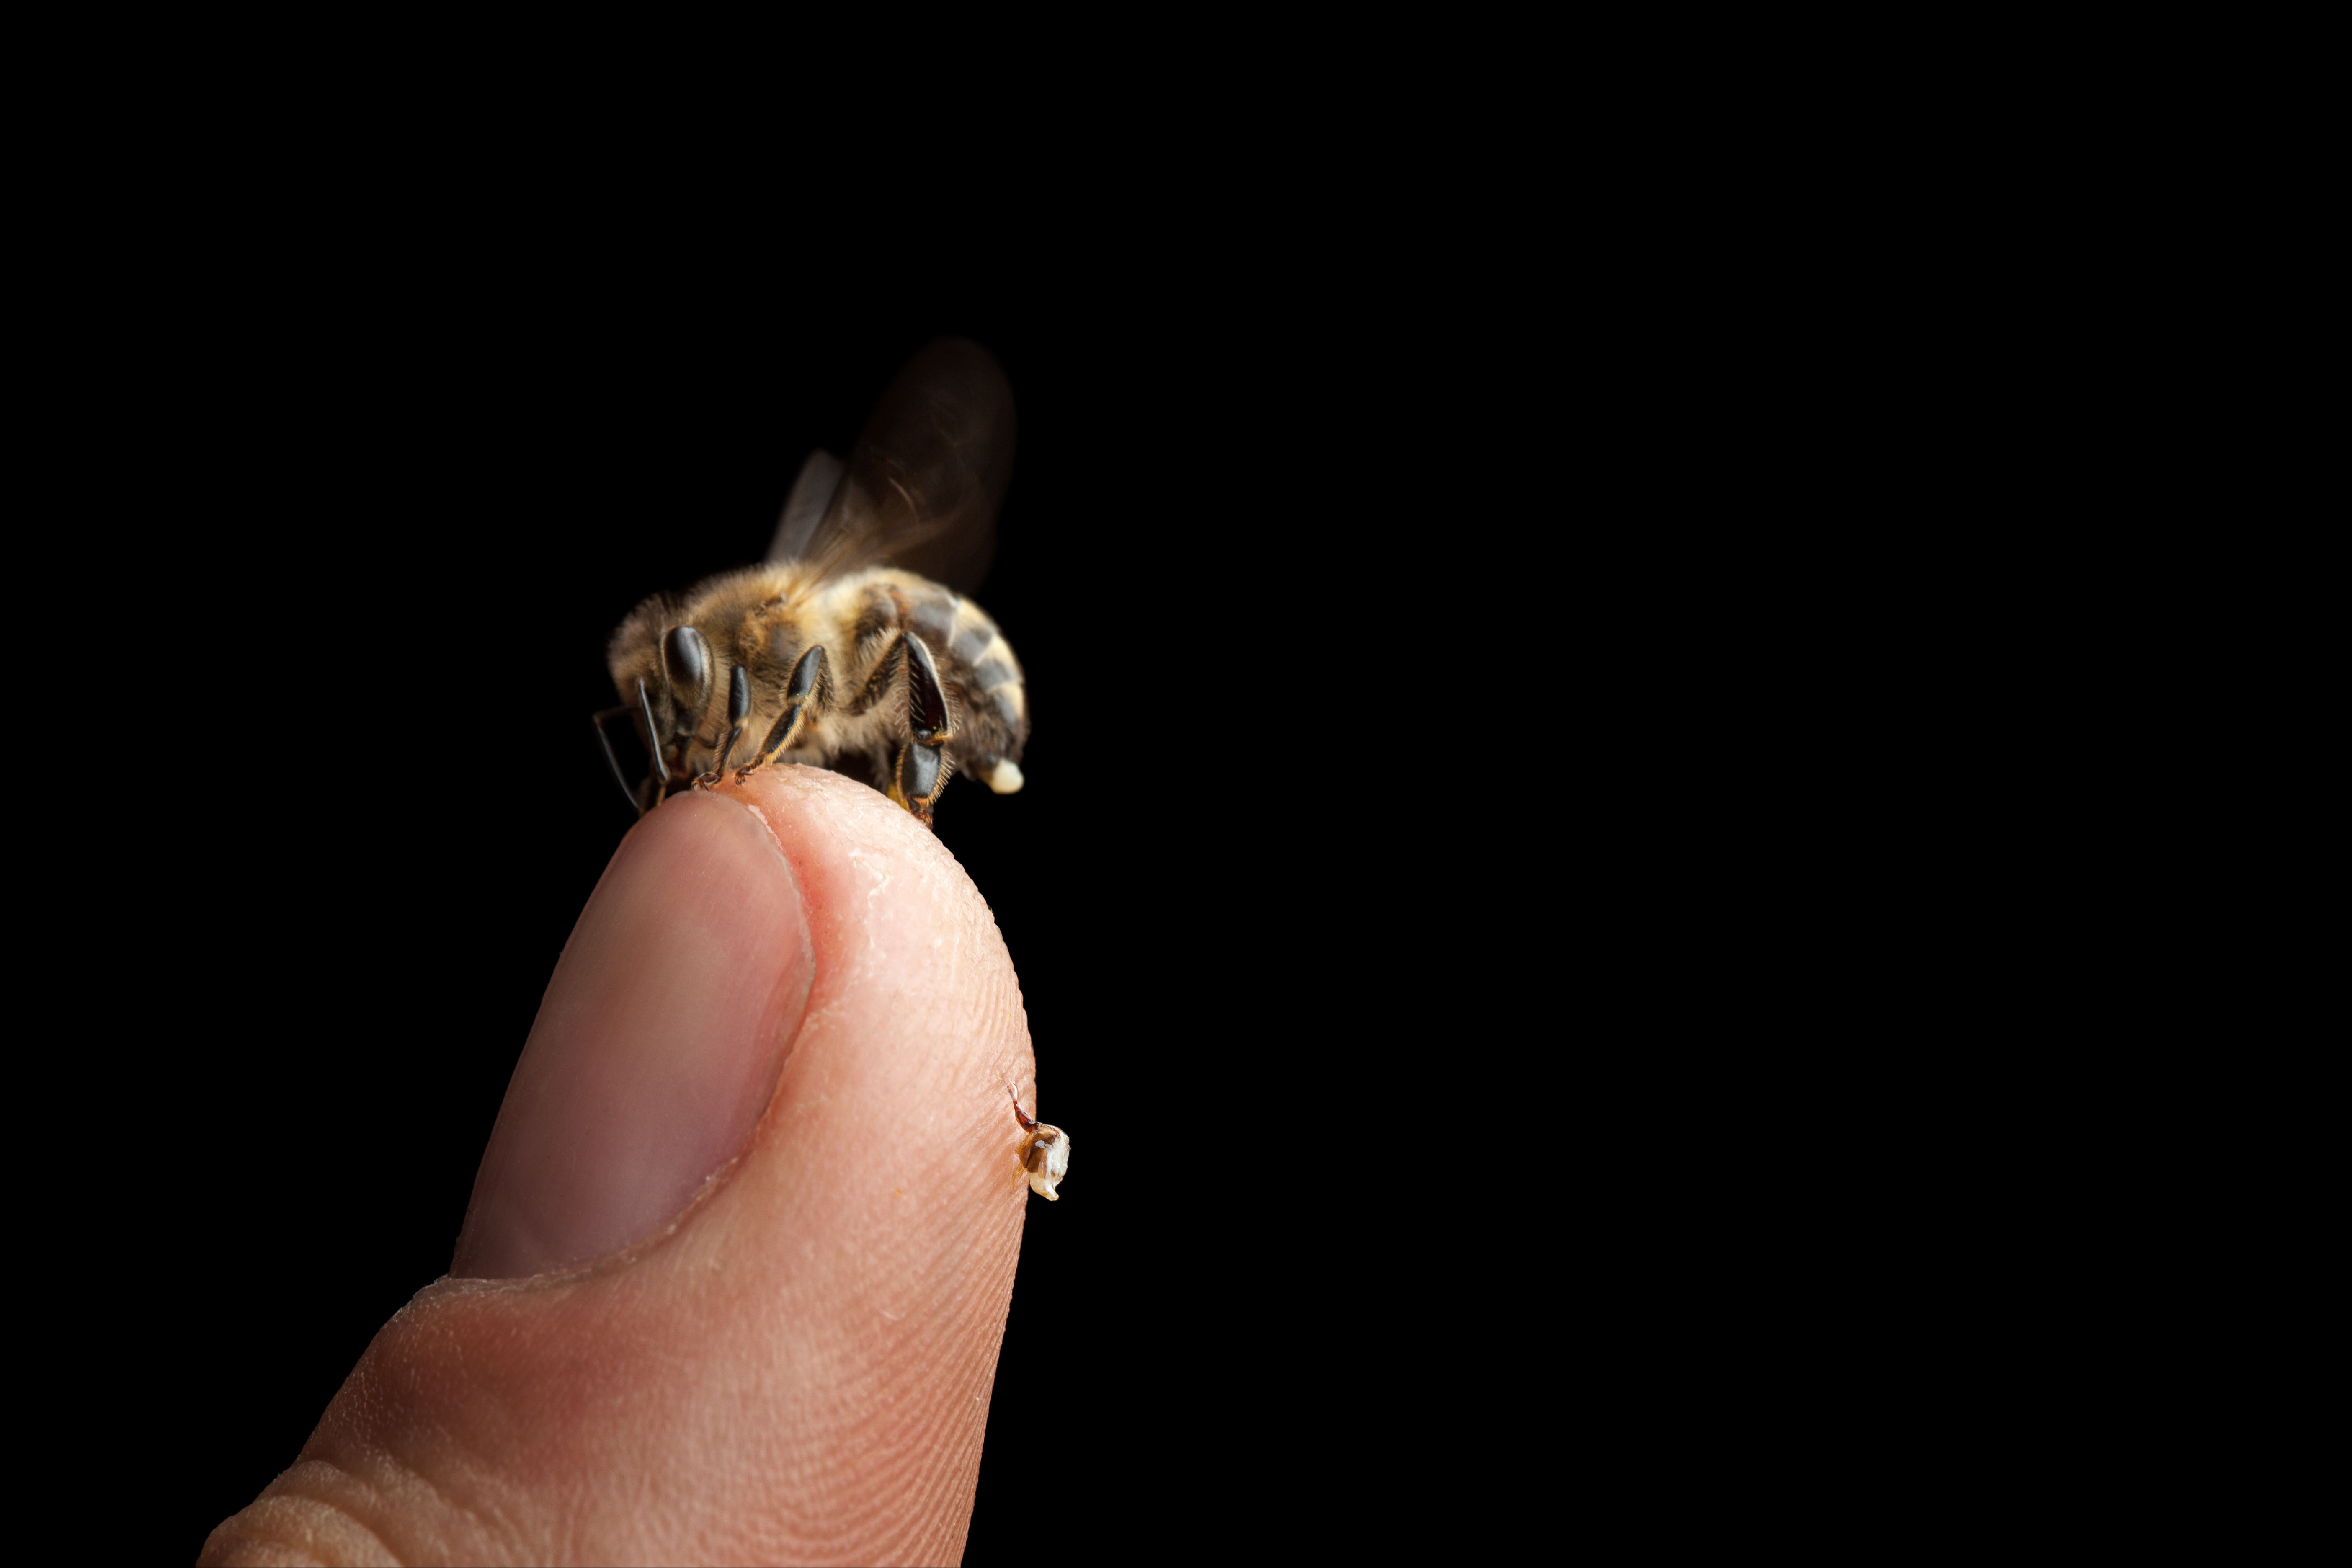 Hand Pinching a Bee